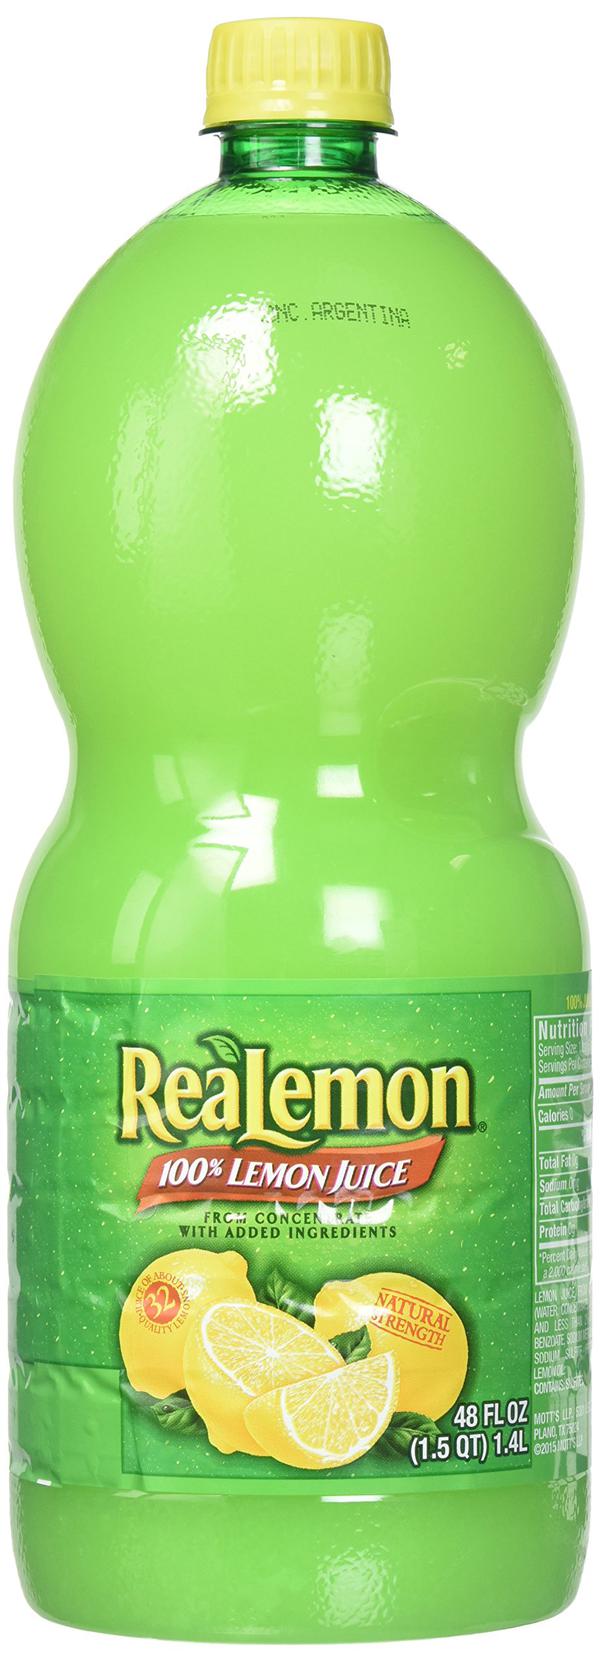 Real Lemon Juice 48 oz